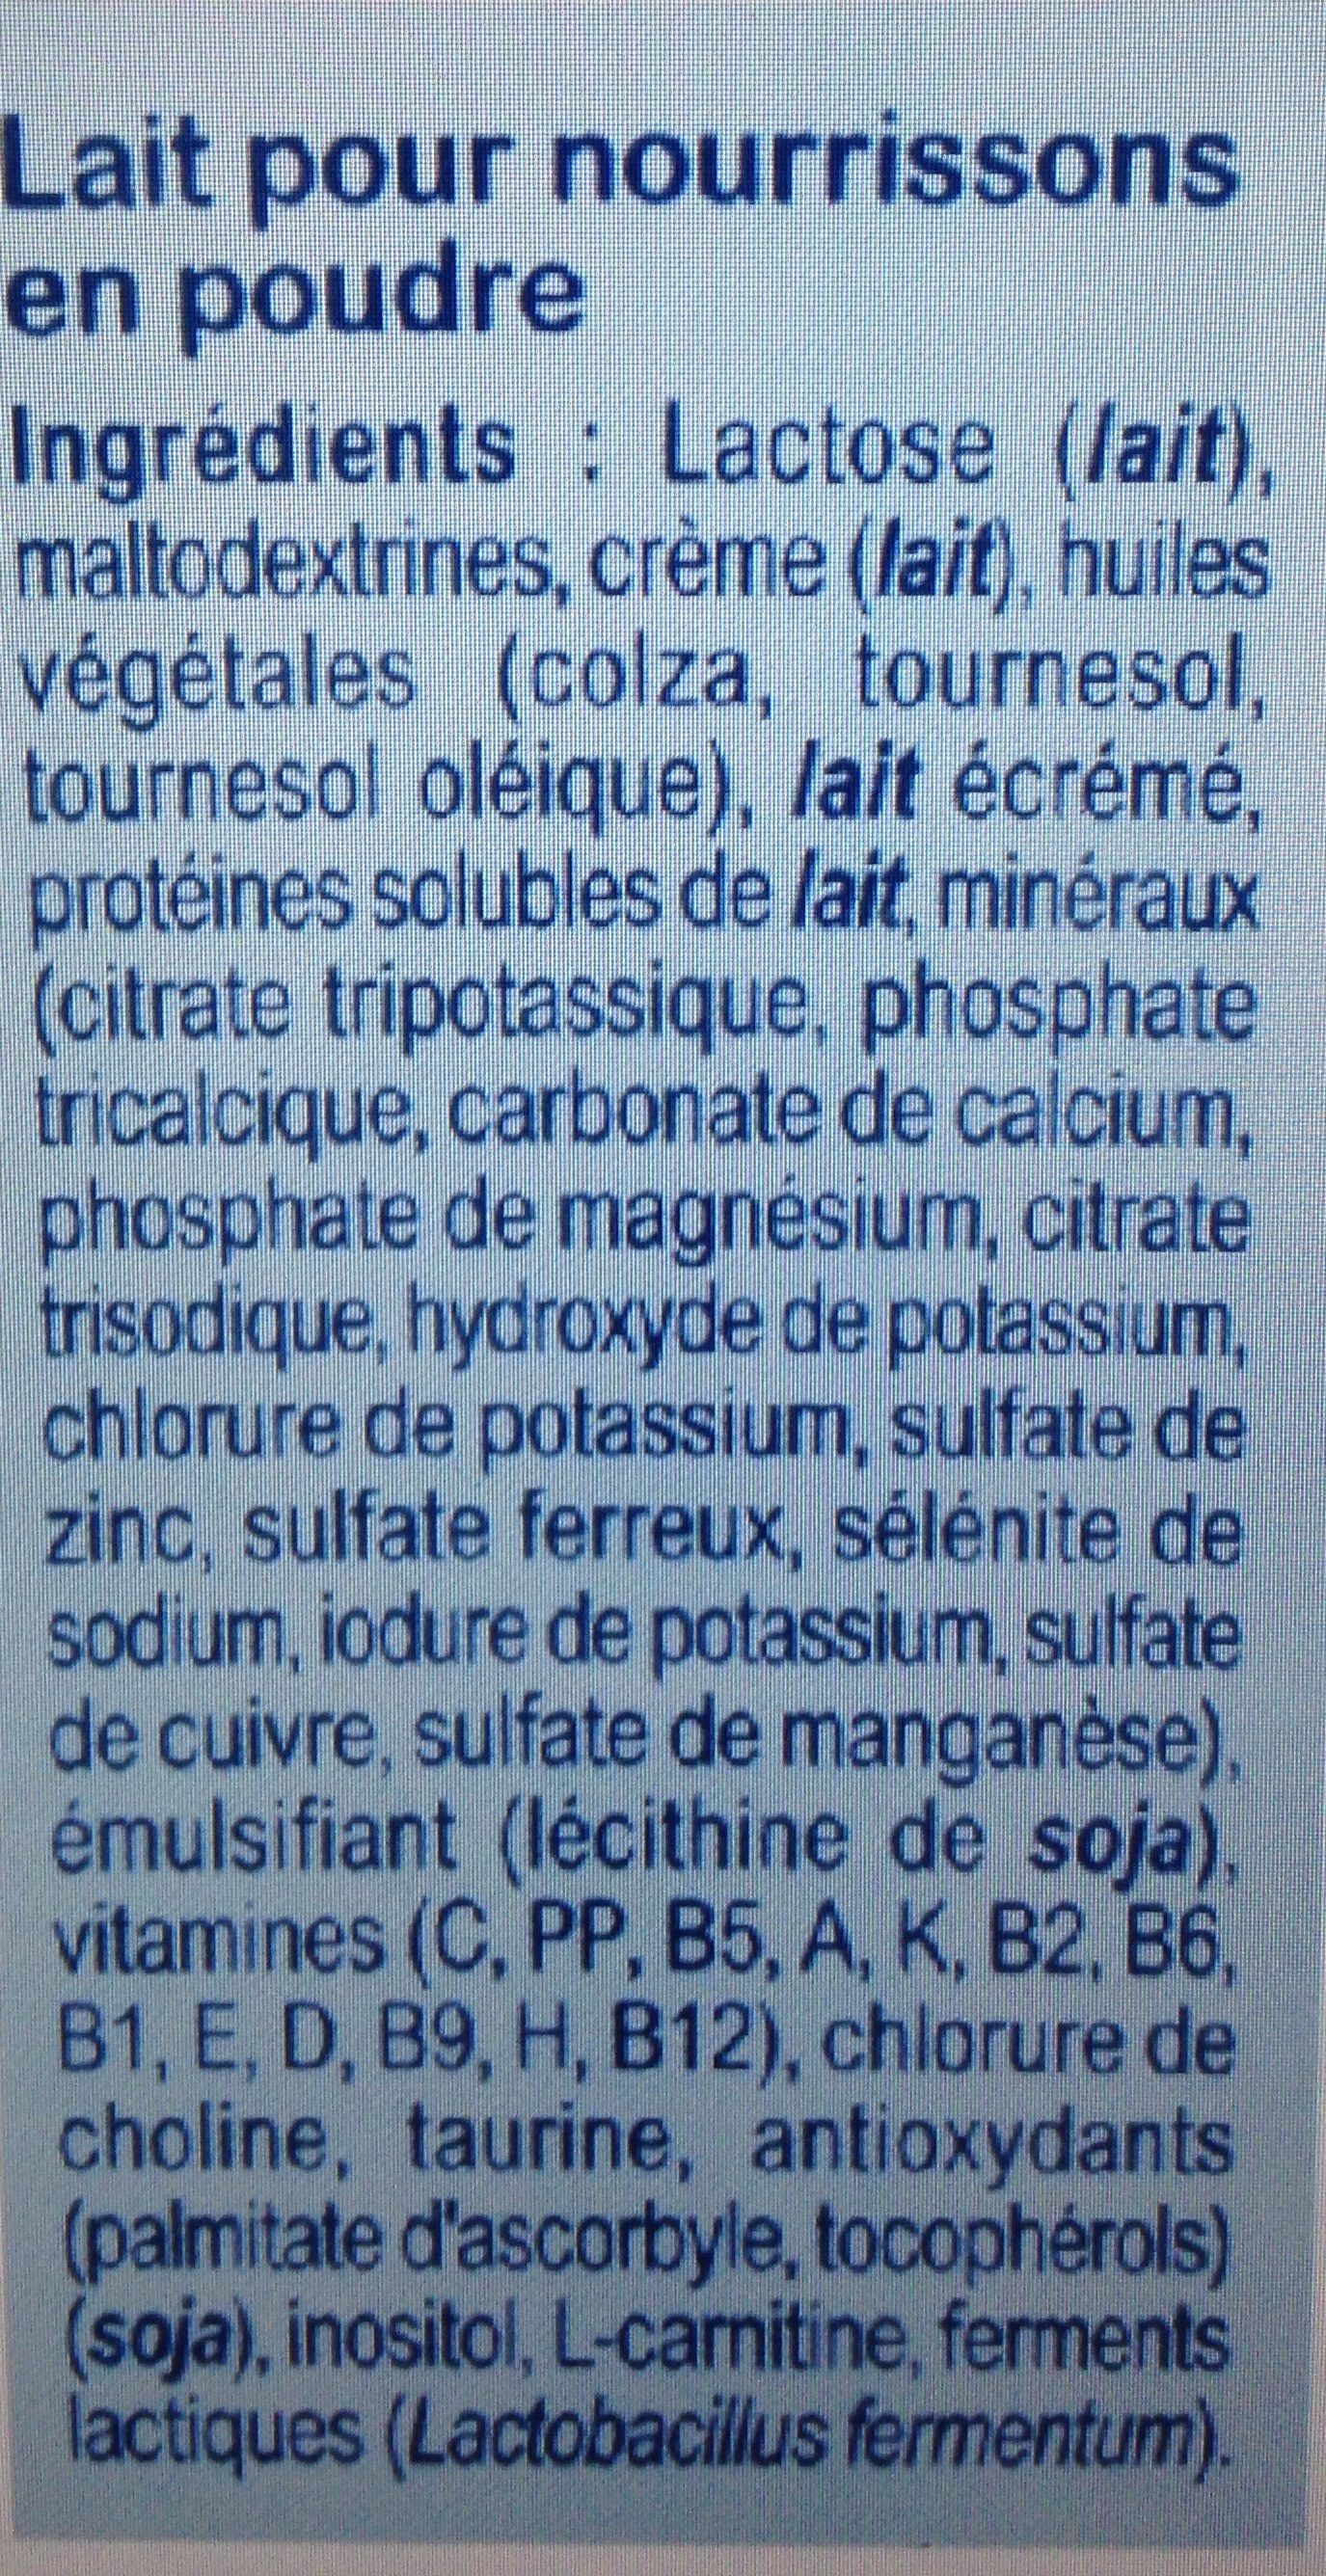 Milumel 1 - Ingredients - fr